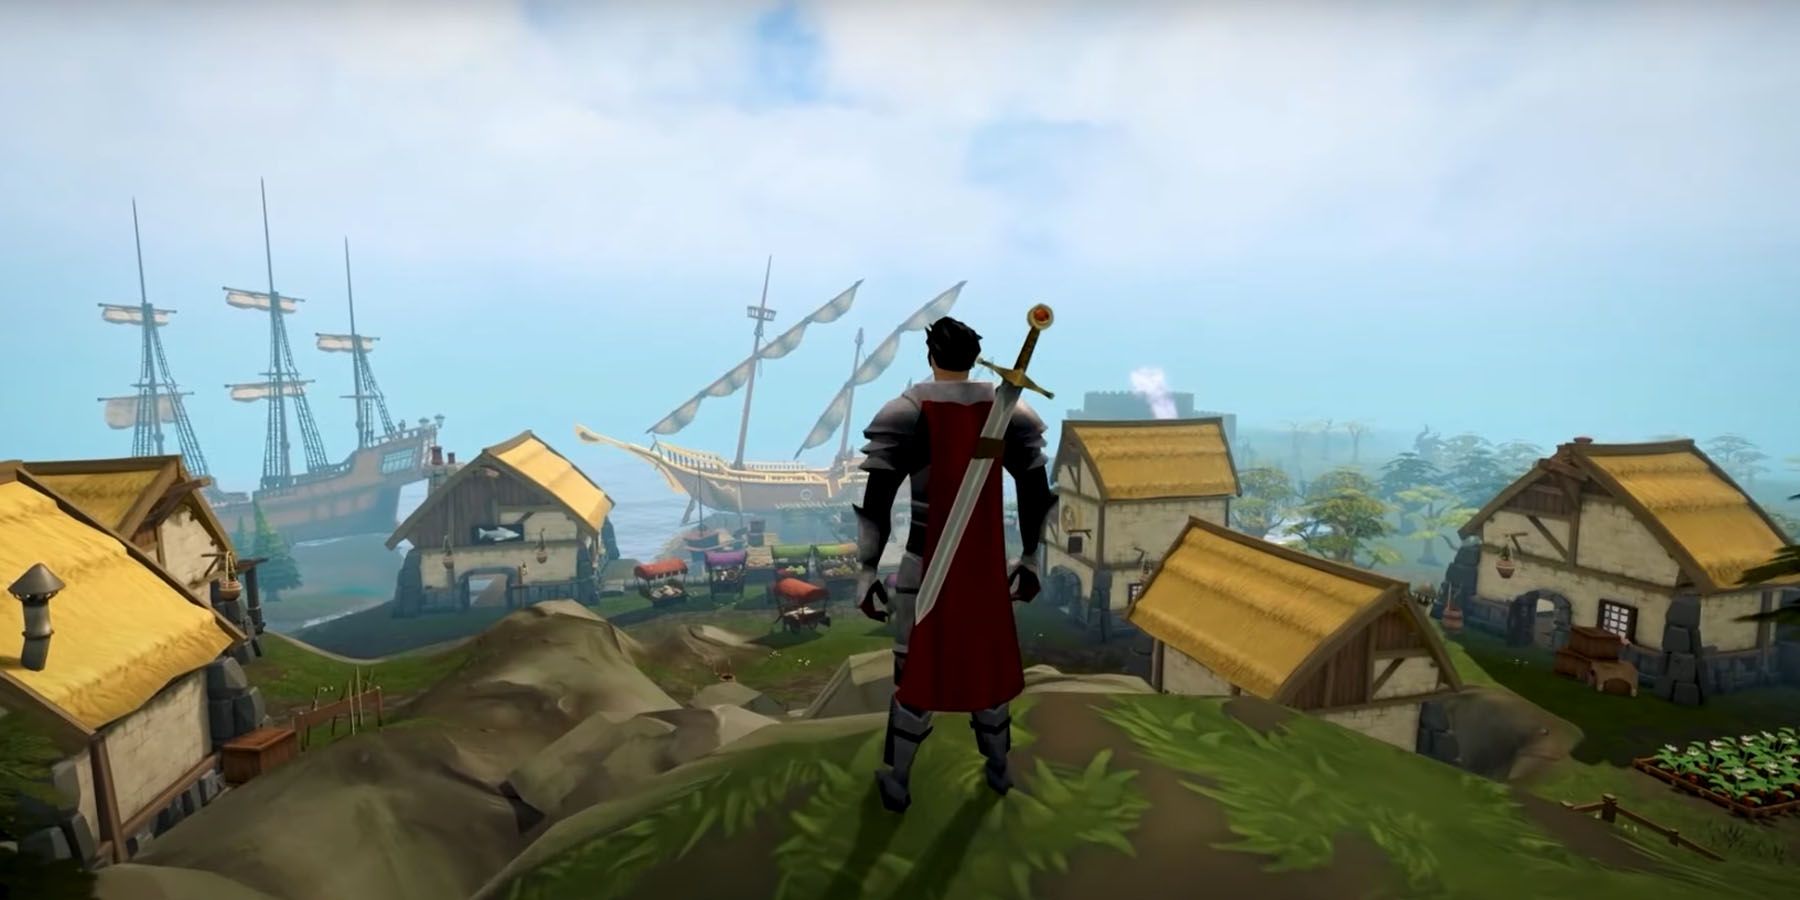 A RuneScape player enjoying the view